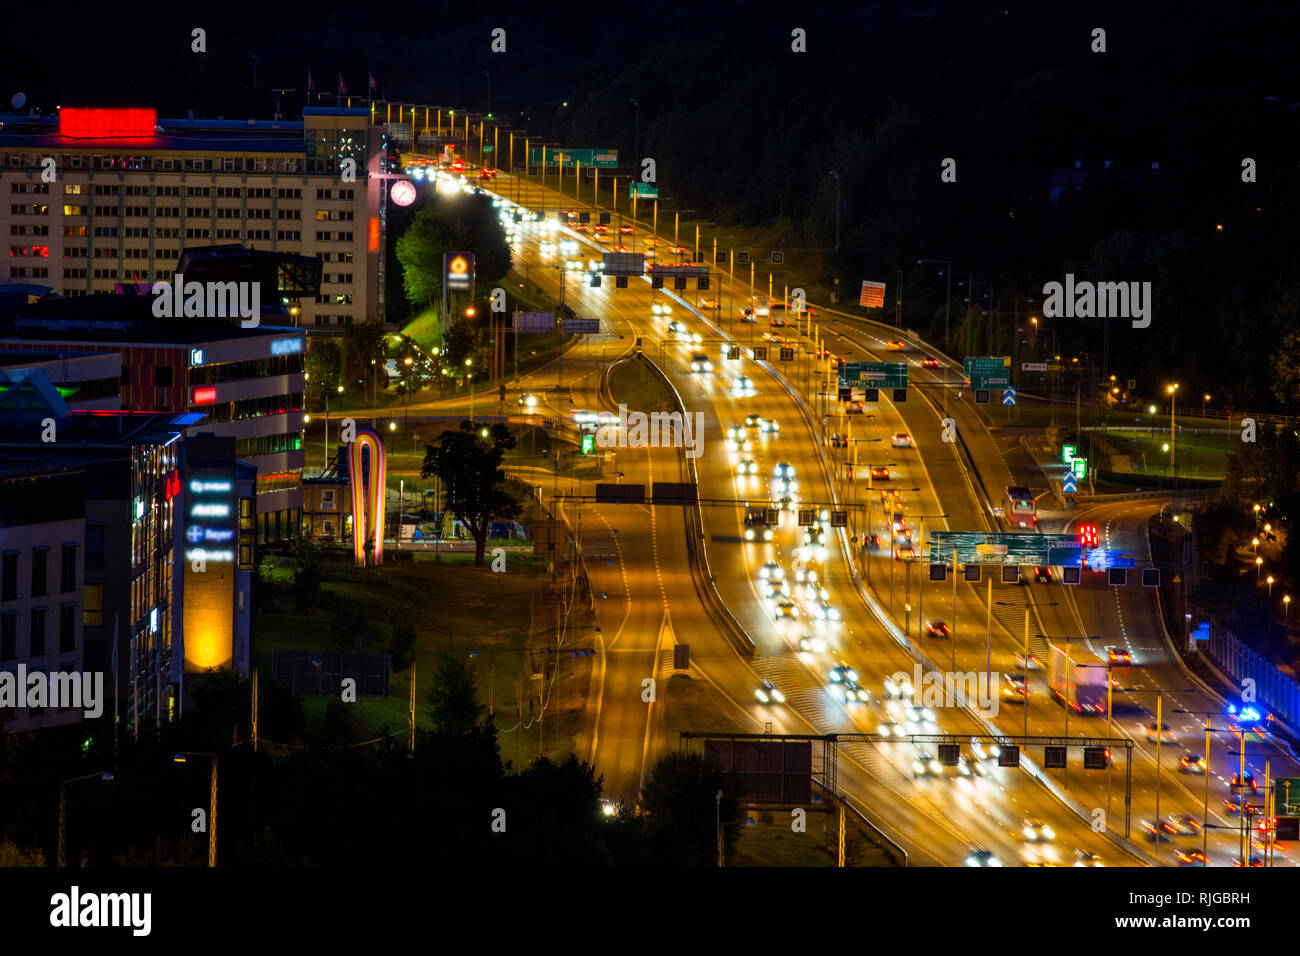 Illuminated road at night Stock Photo